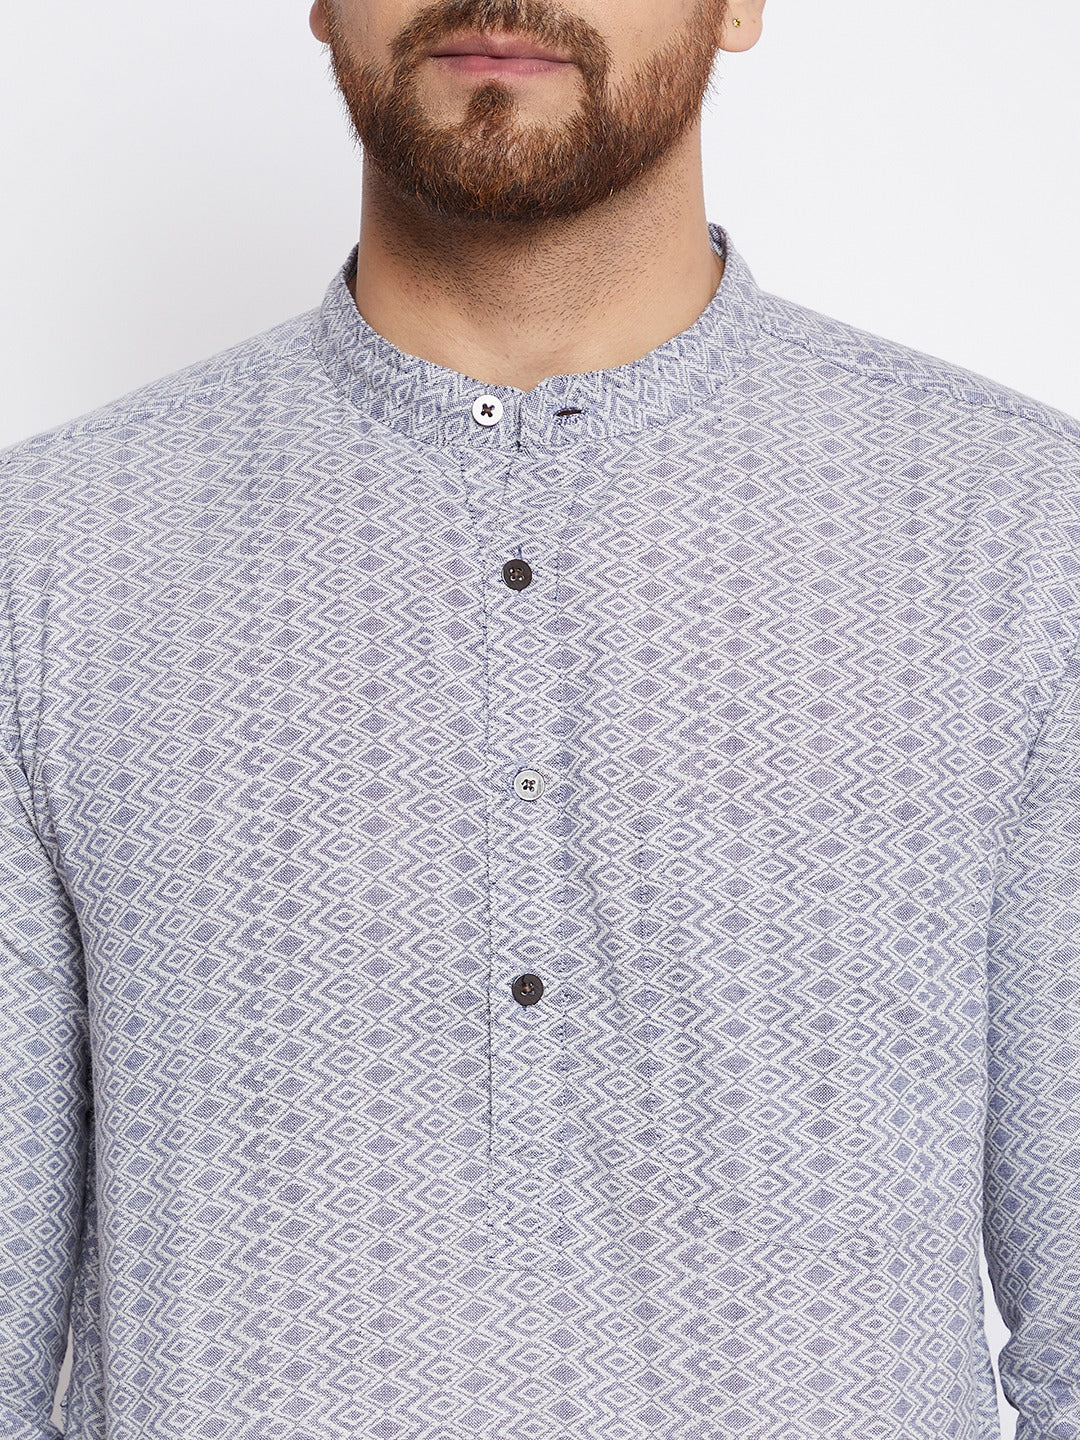 Men's Pure Cotton Woven Design Kurta - Even Apparels